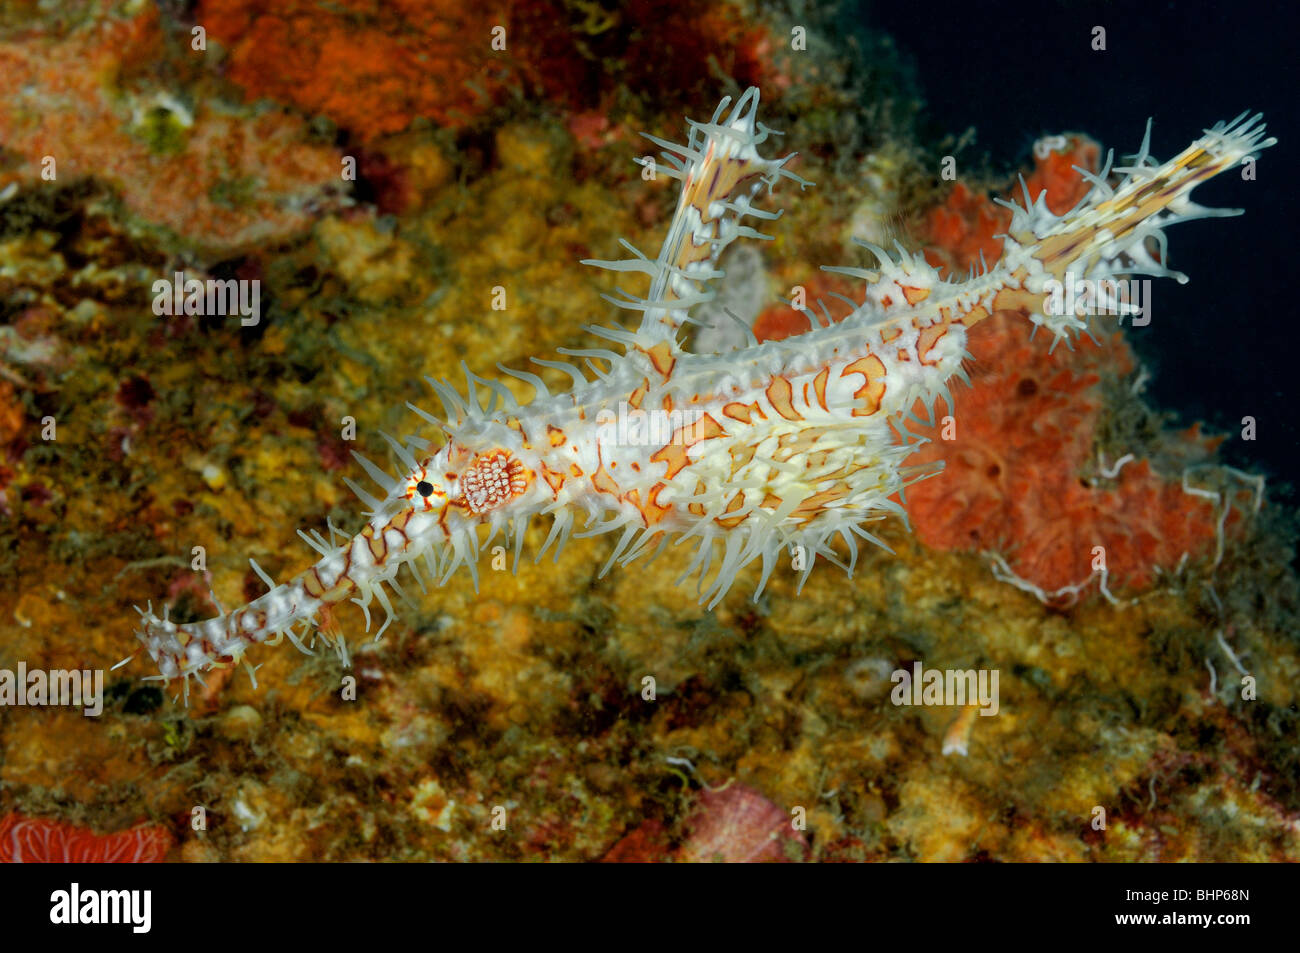 Solenostomus paradoxus, Harlequin ghost pipefish, Ornate ghost pipefish, Pemuteran, houserref, Bali Stock Photo